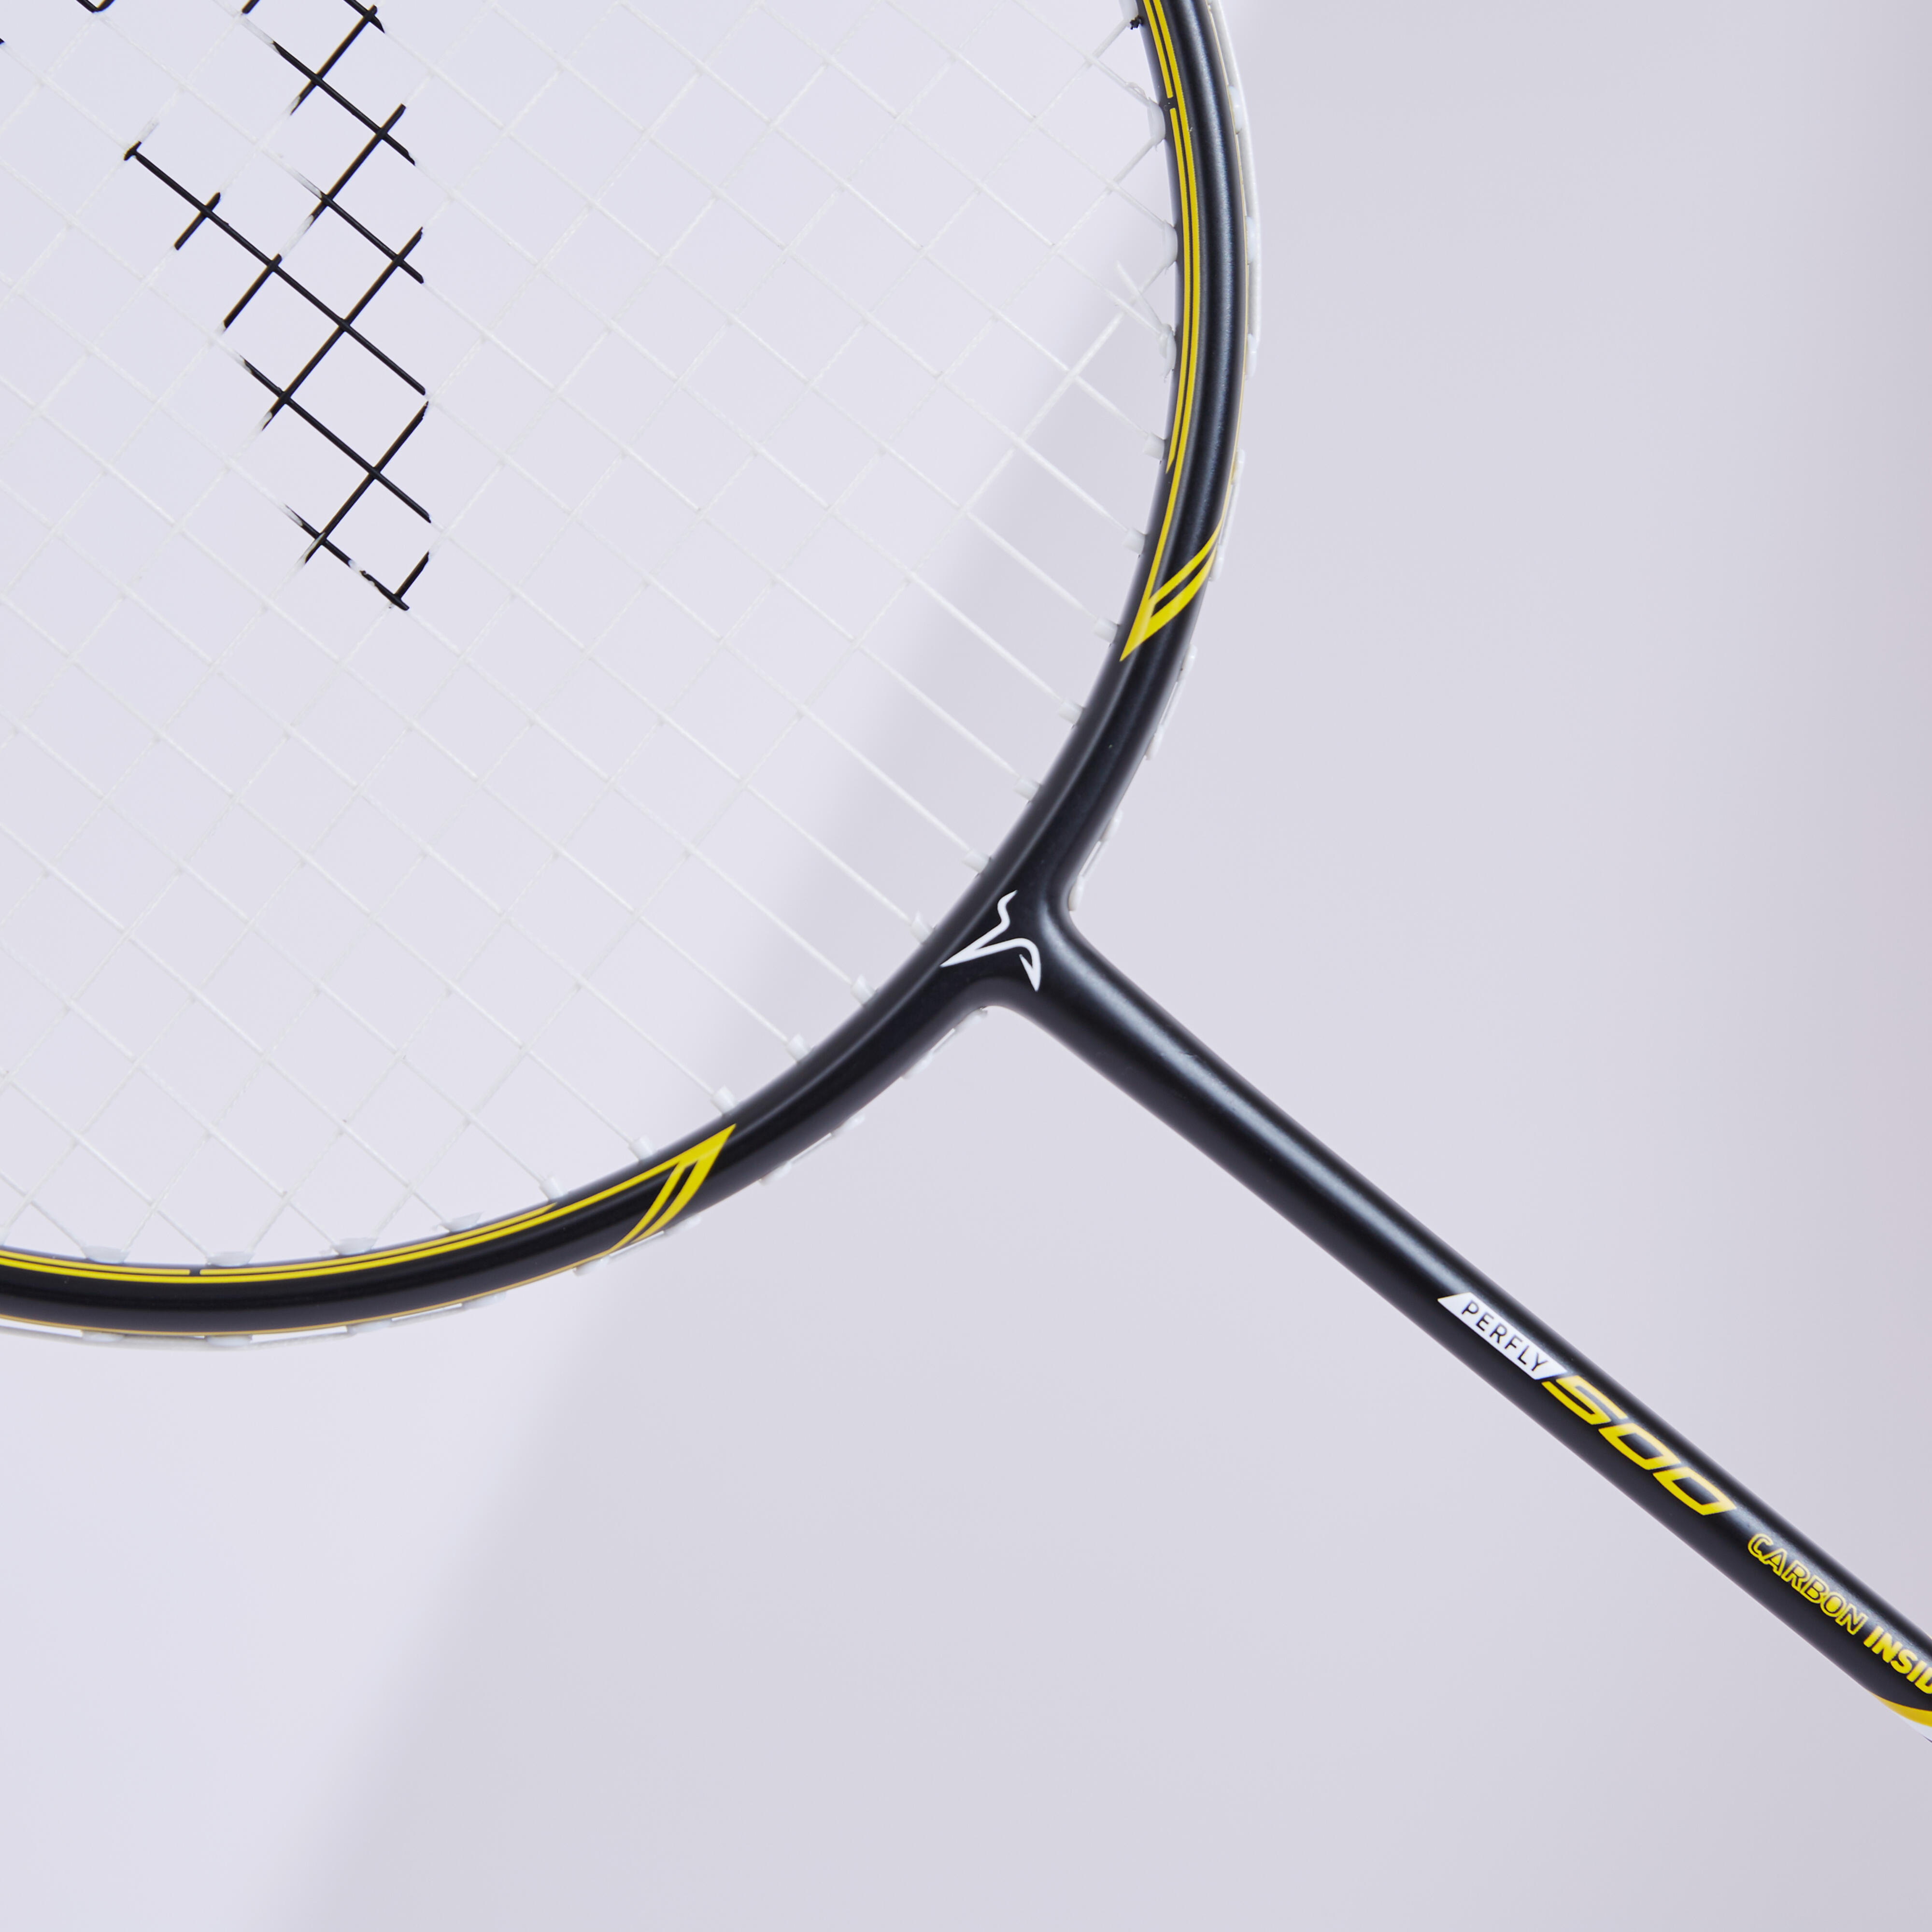 Raquette de badminton - BR 500 noir/jaune - PERFLY